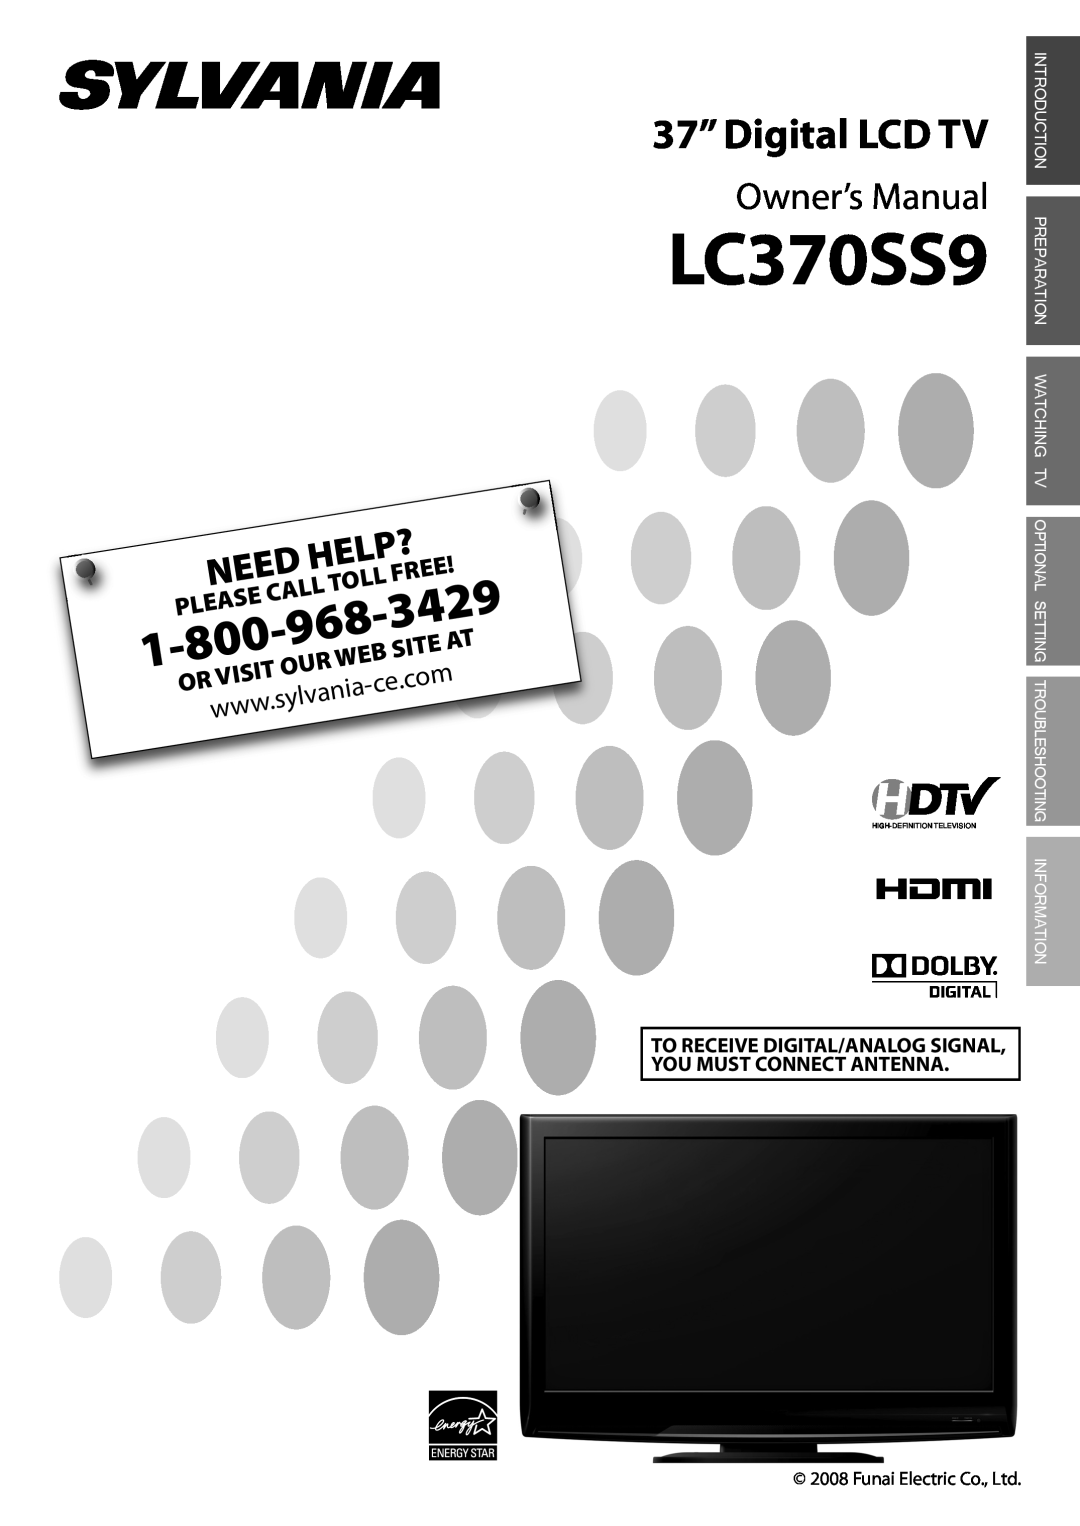 Sylvania LC370SS9 owner manual 3429, sylvania, Free, Visit, 37” Digital LCD TV, Owner’s Manual, Need, Help?, Call, Site 